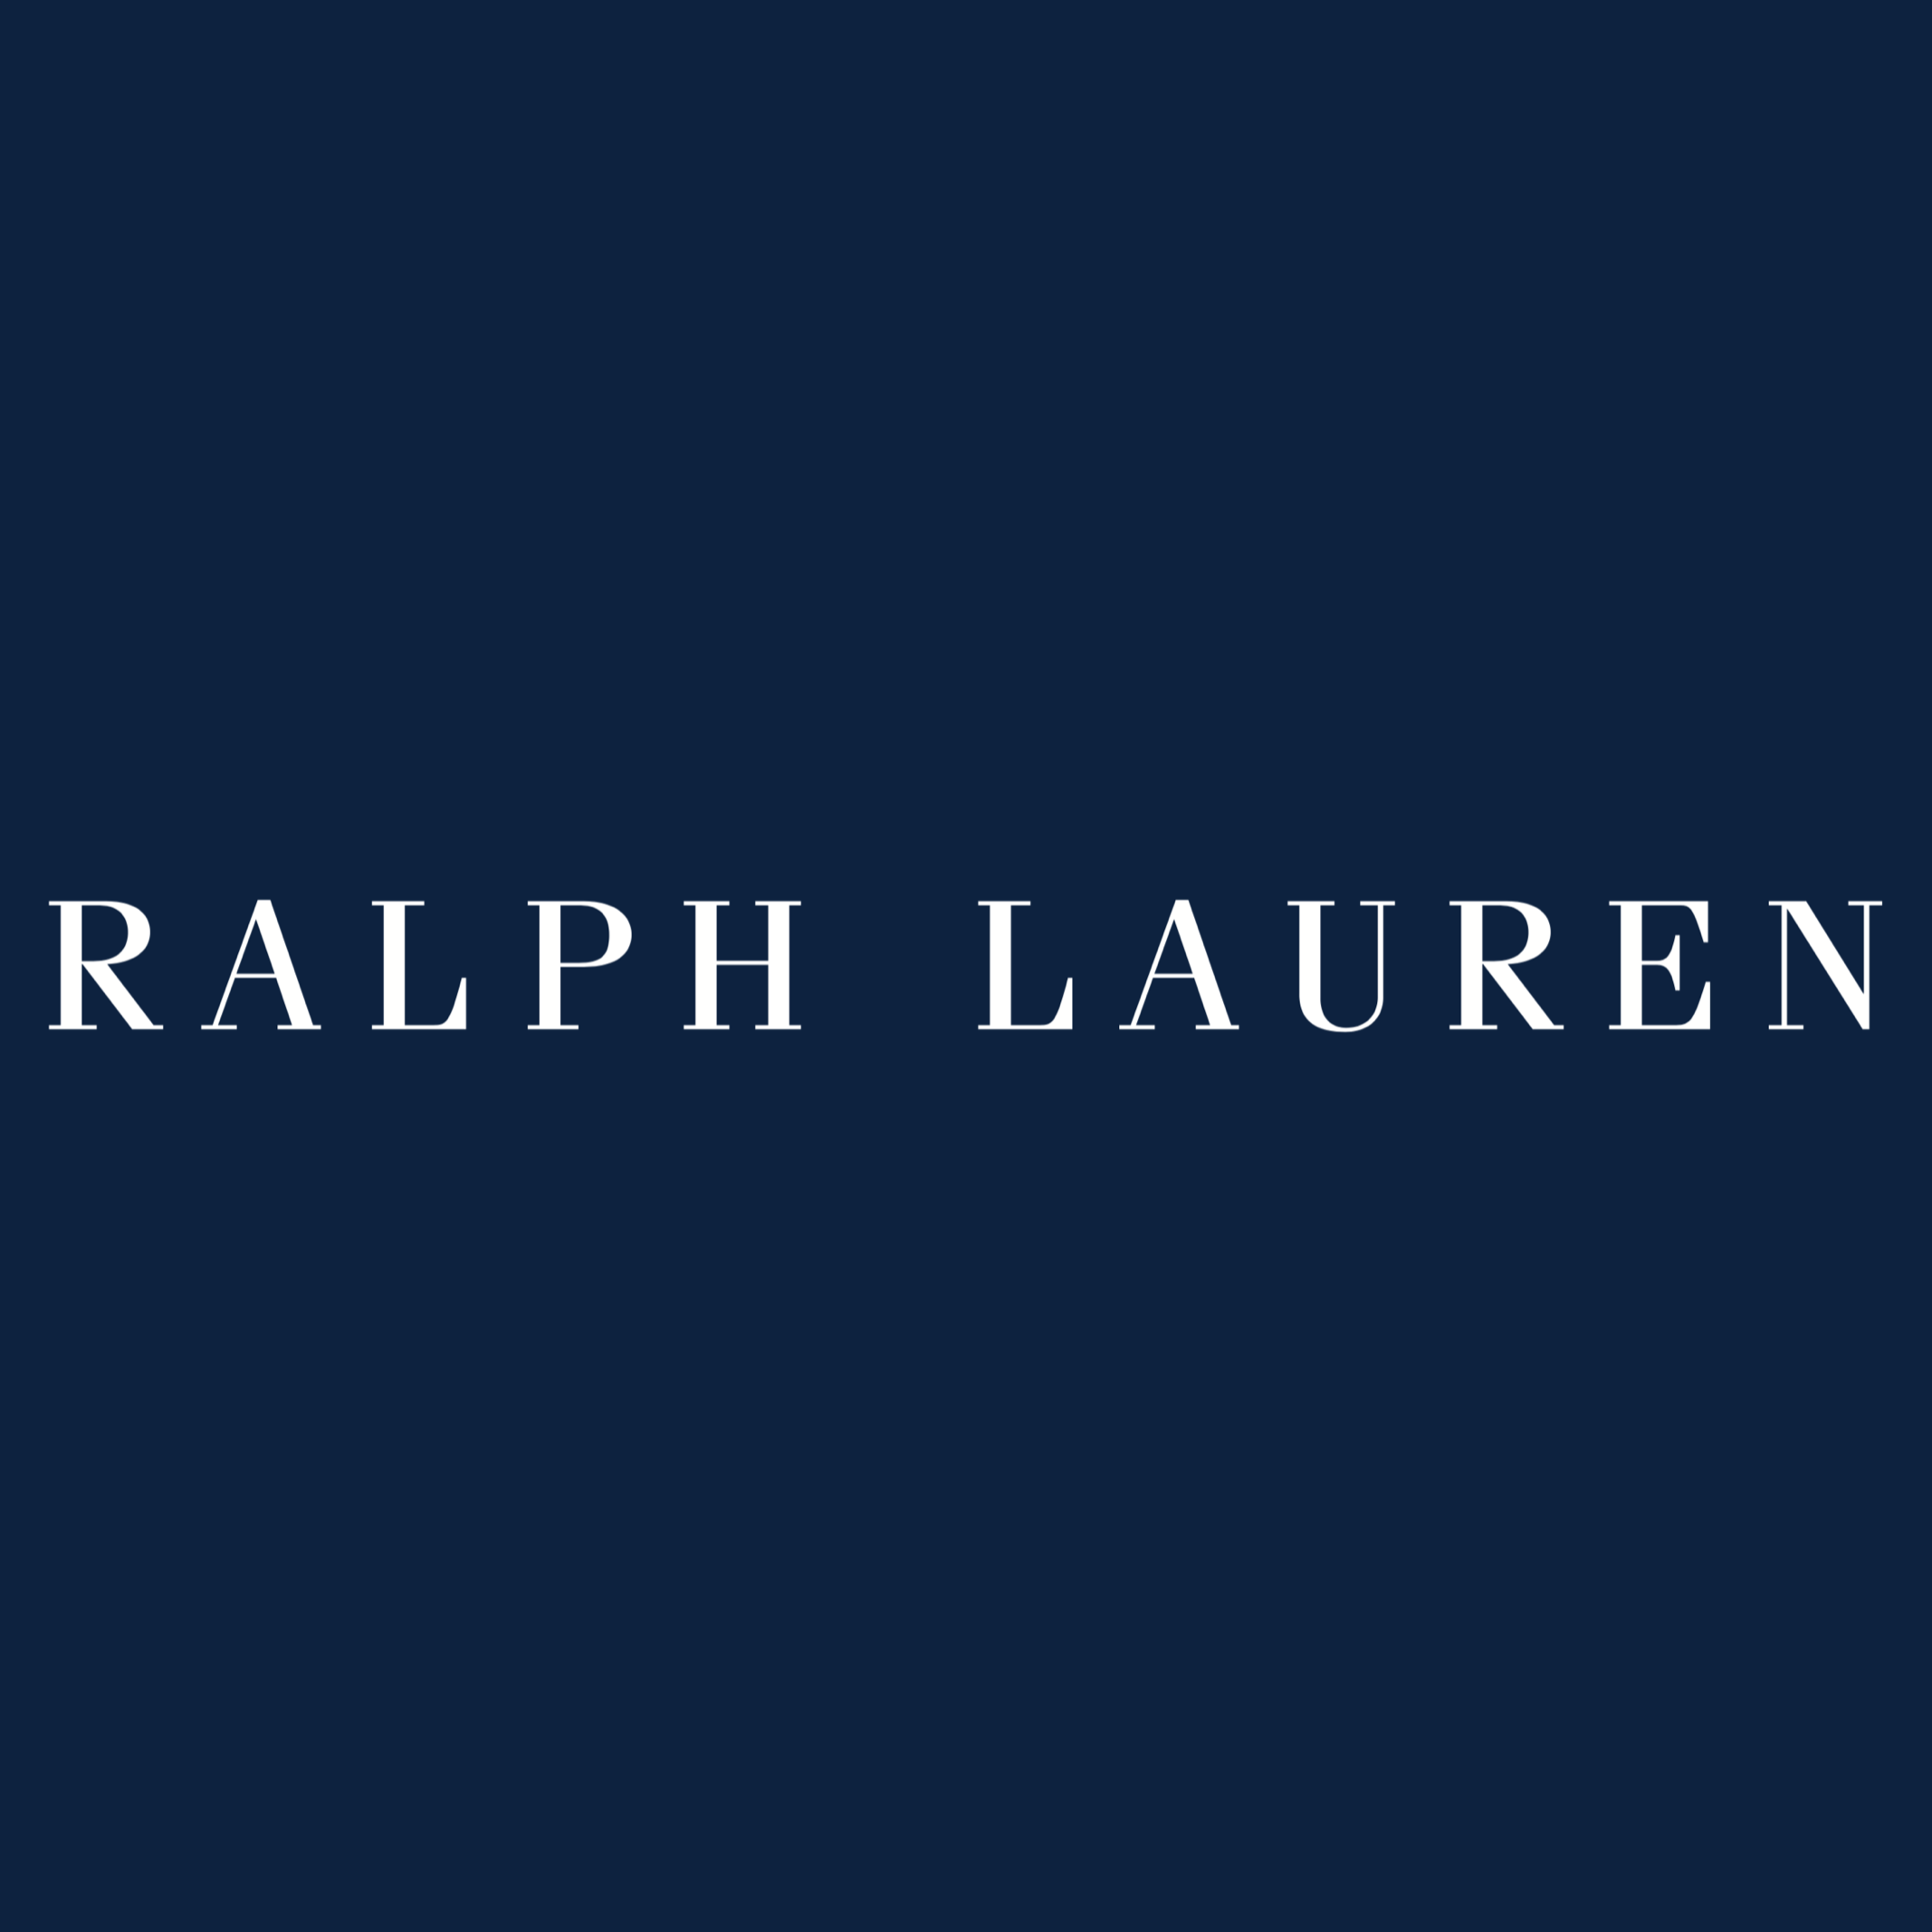 Polo Ralph Lauren Multiplaza Escazu